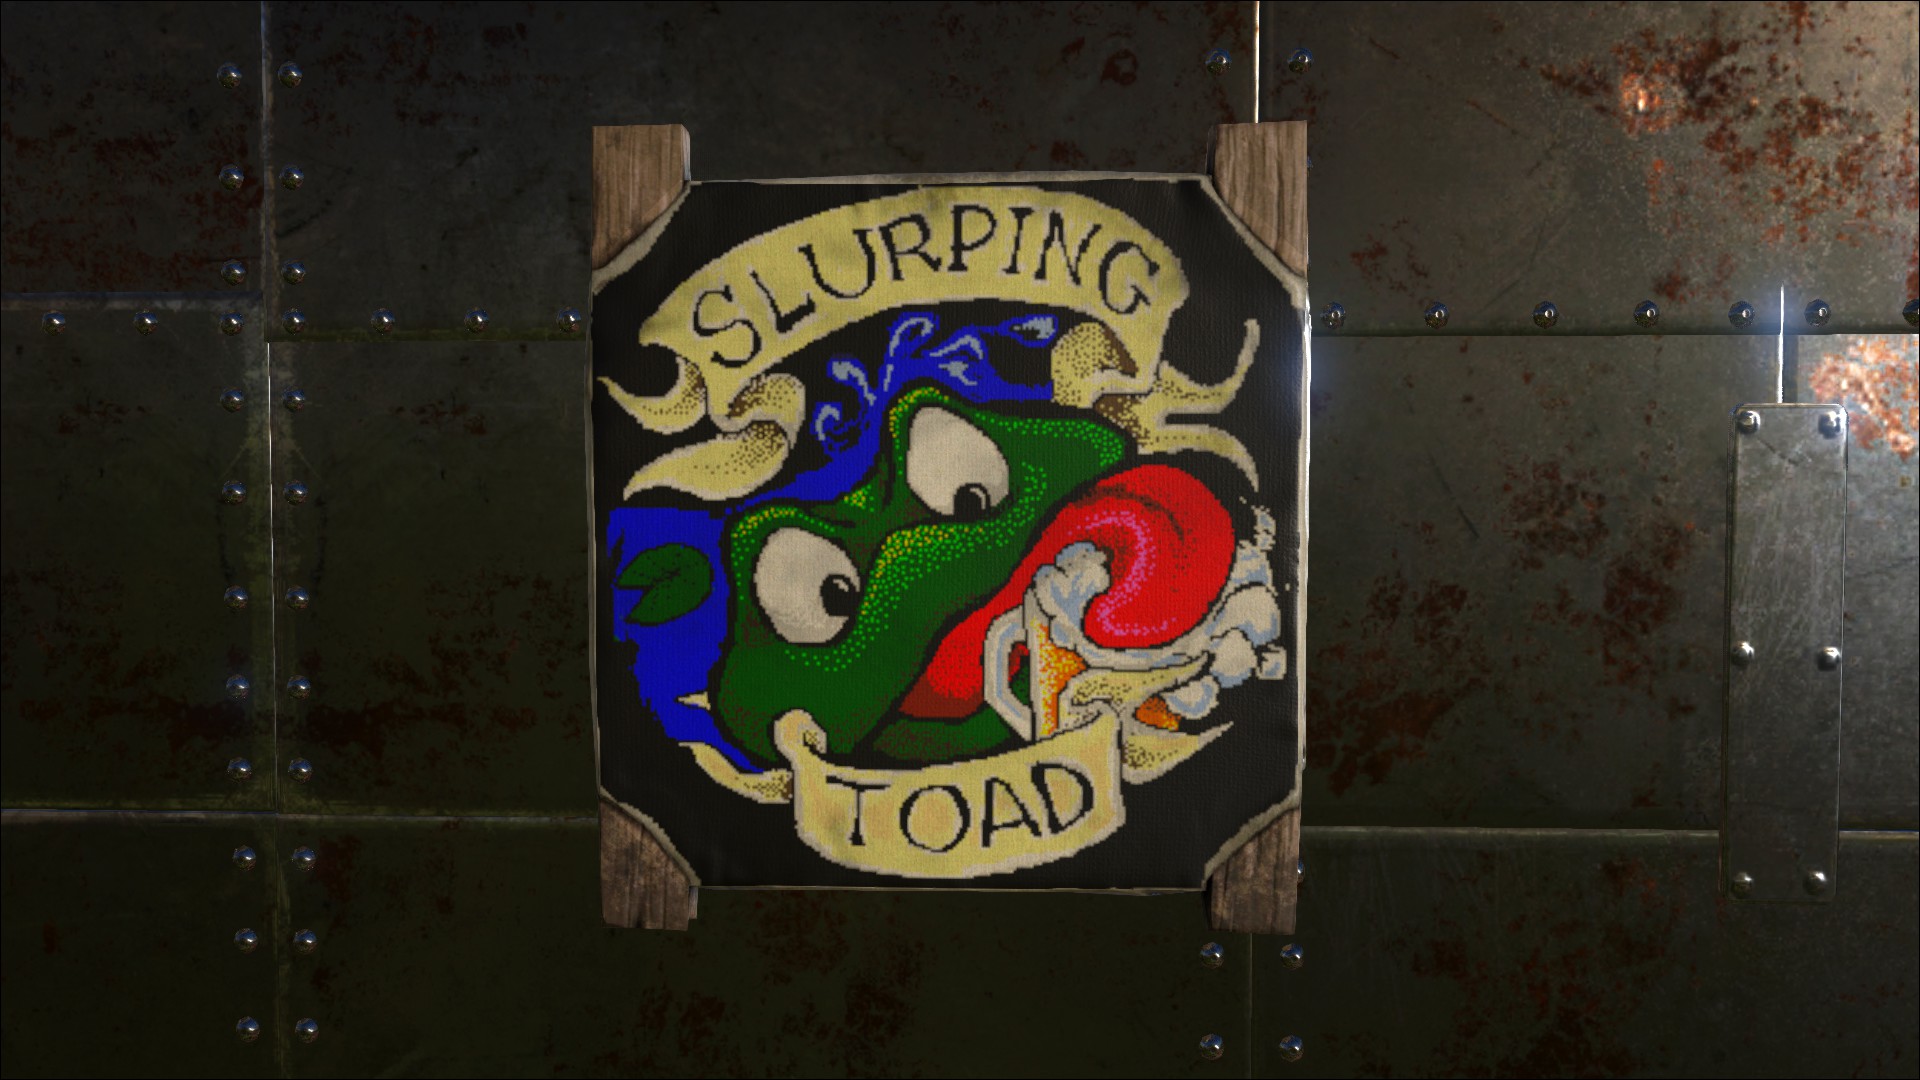 Slurping toad Pub sign.jpg